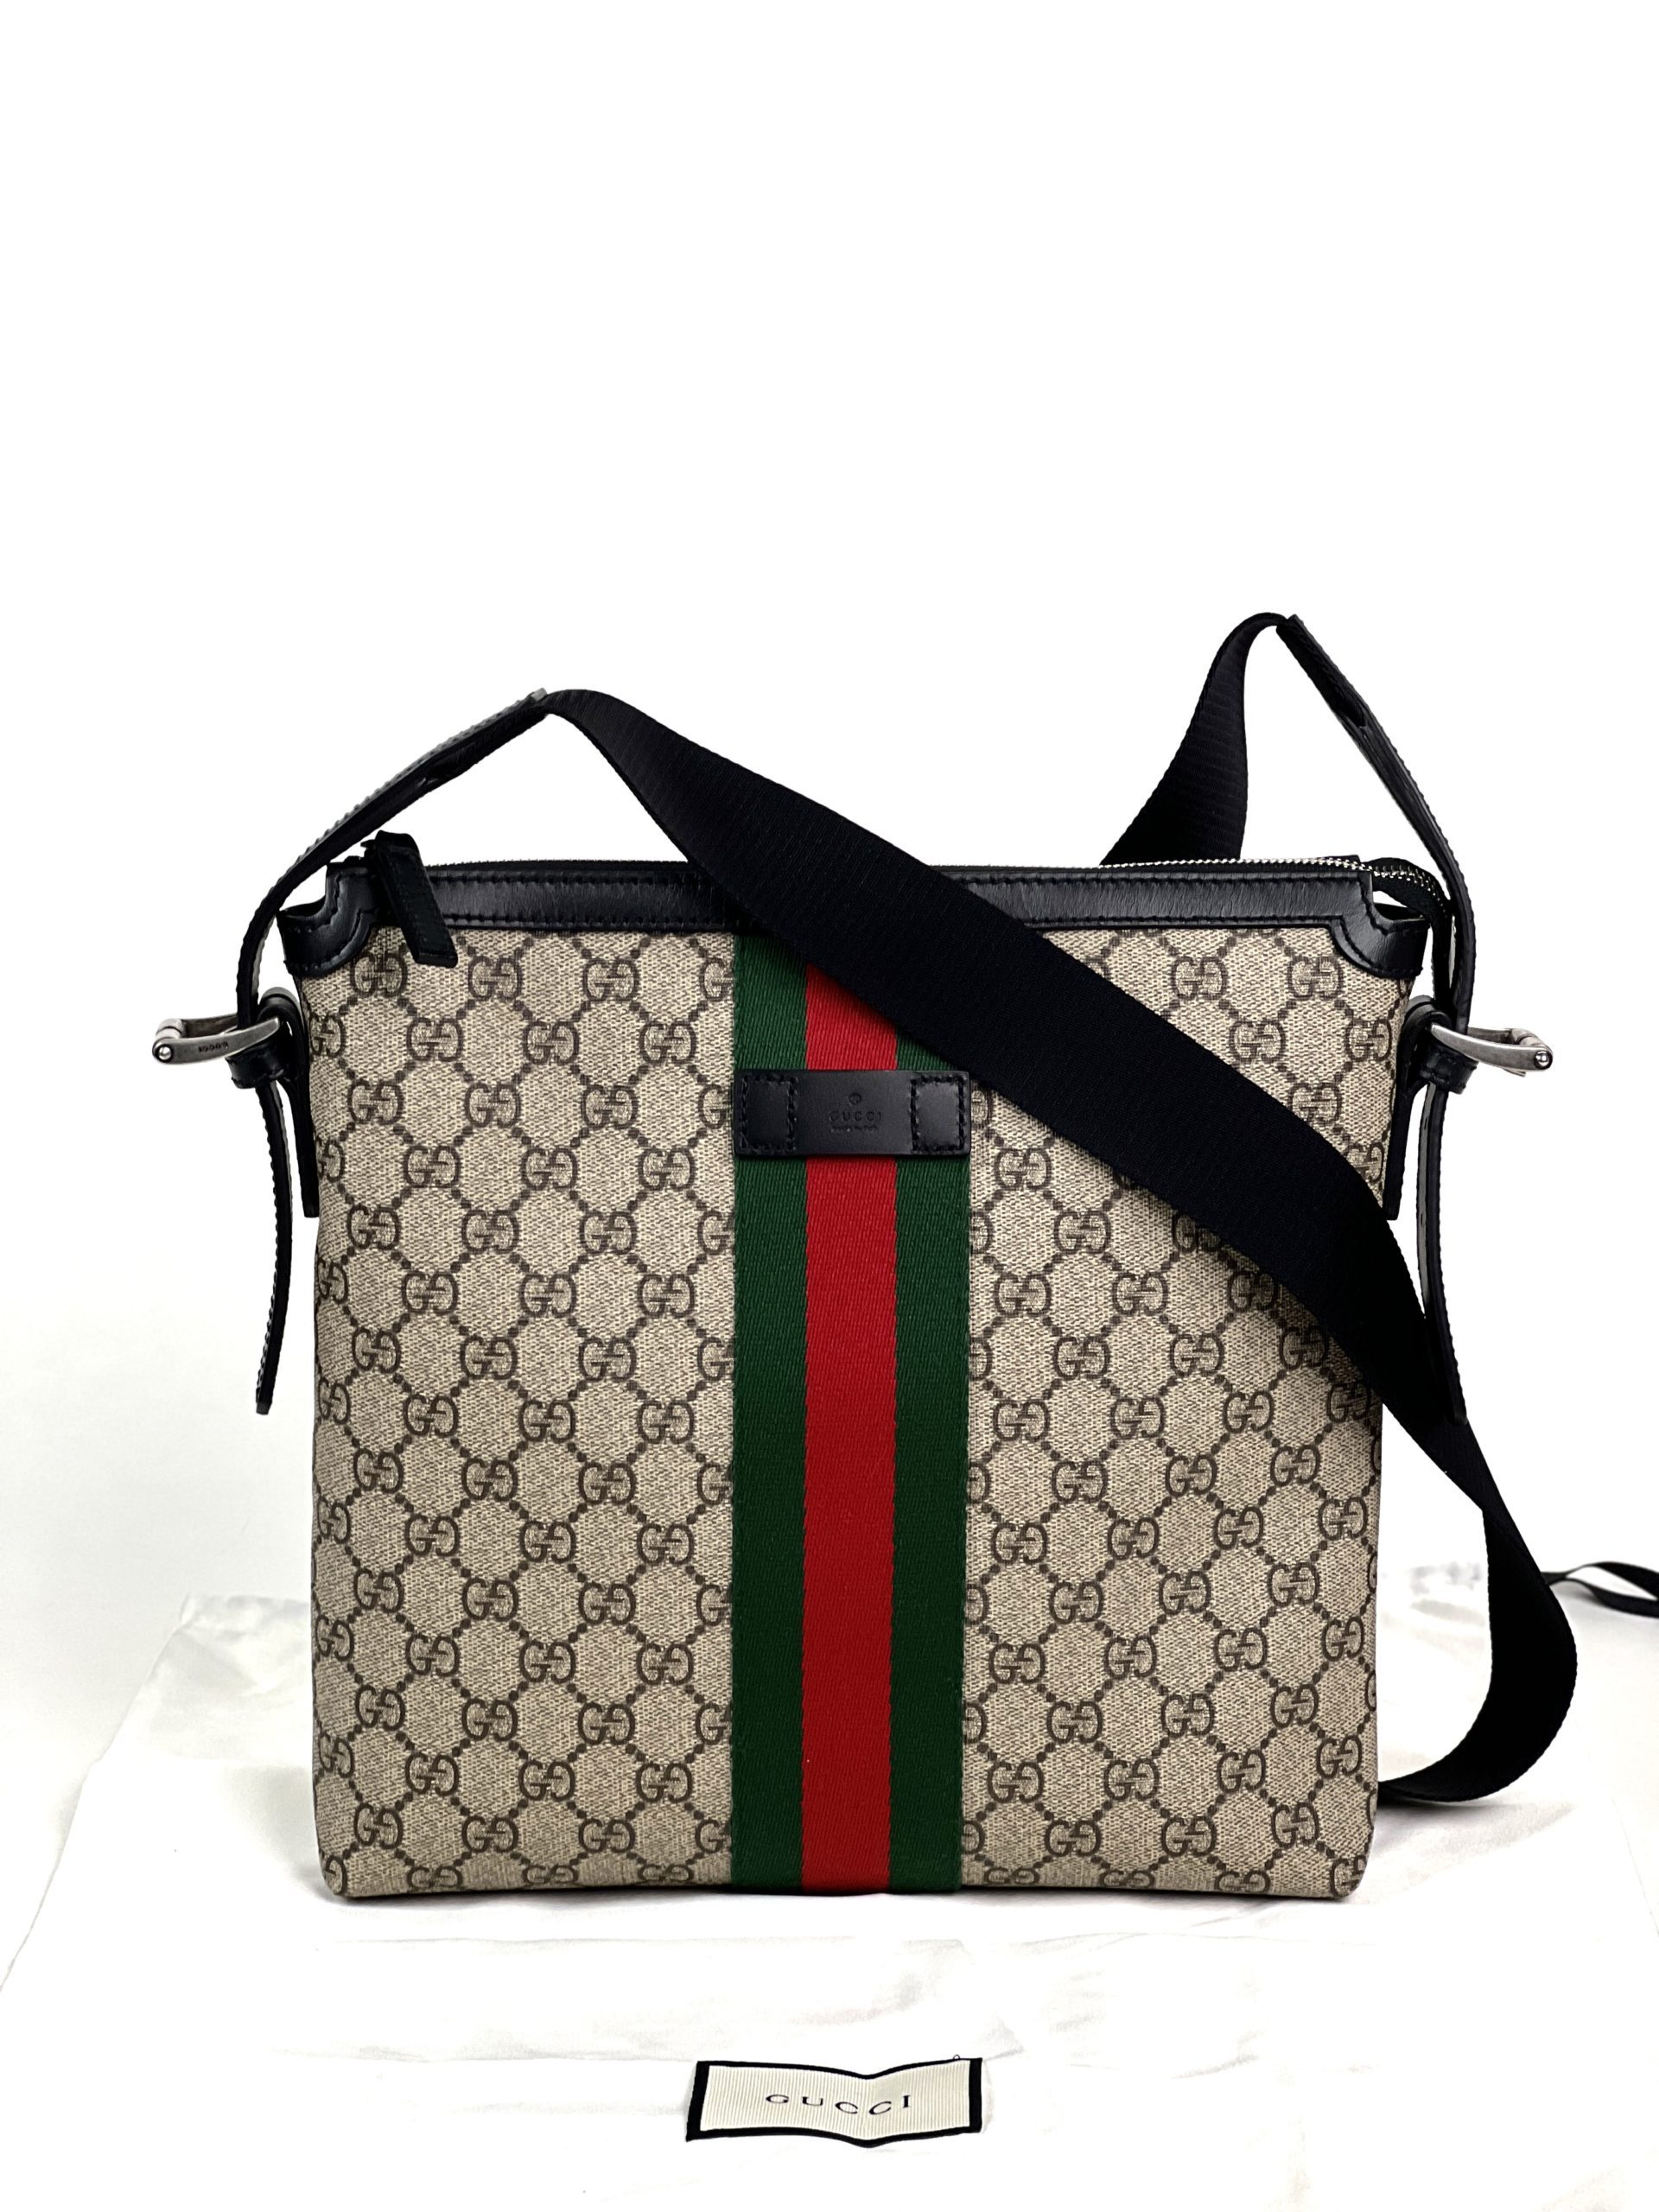 Gucci GG Supreme Monogram Web Messenger Bag in Black